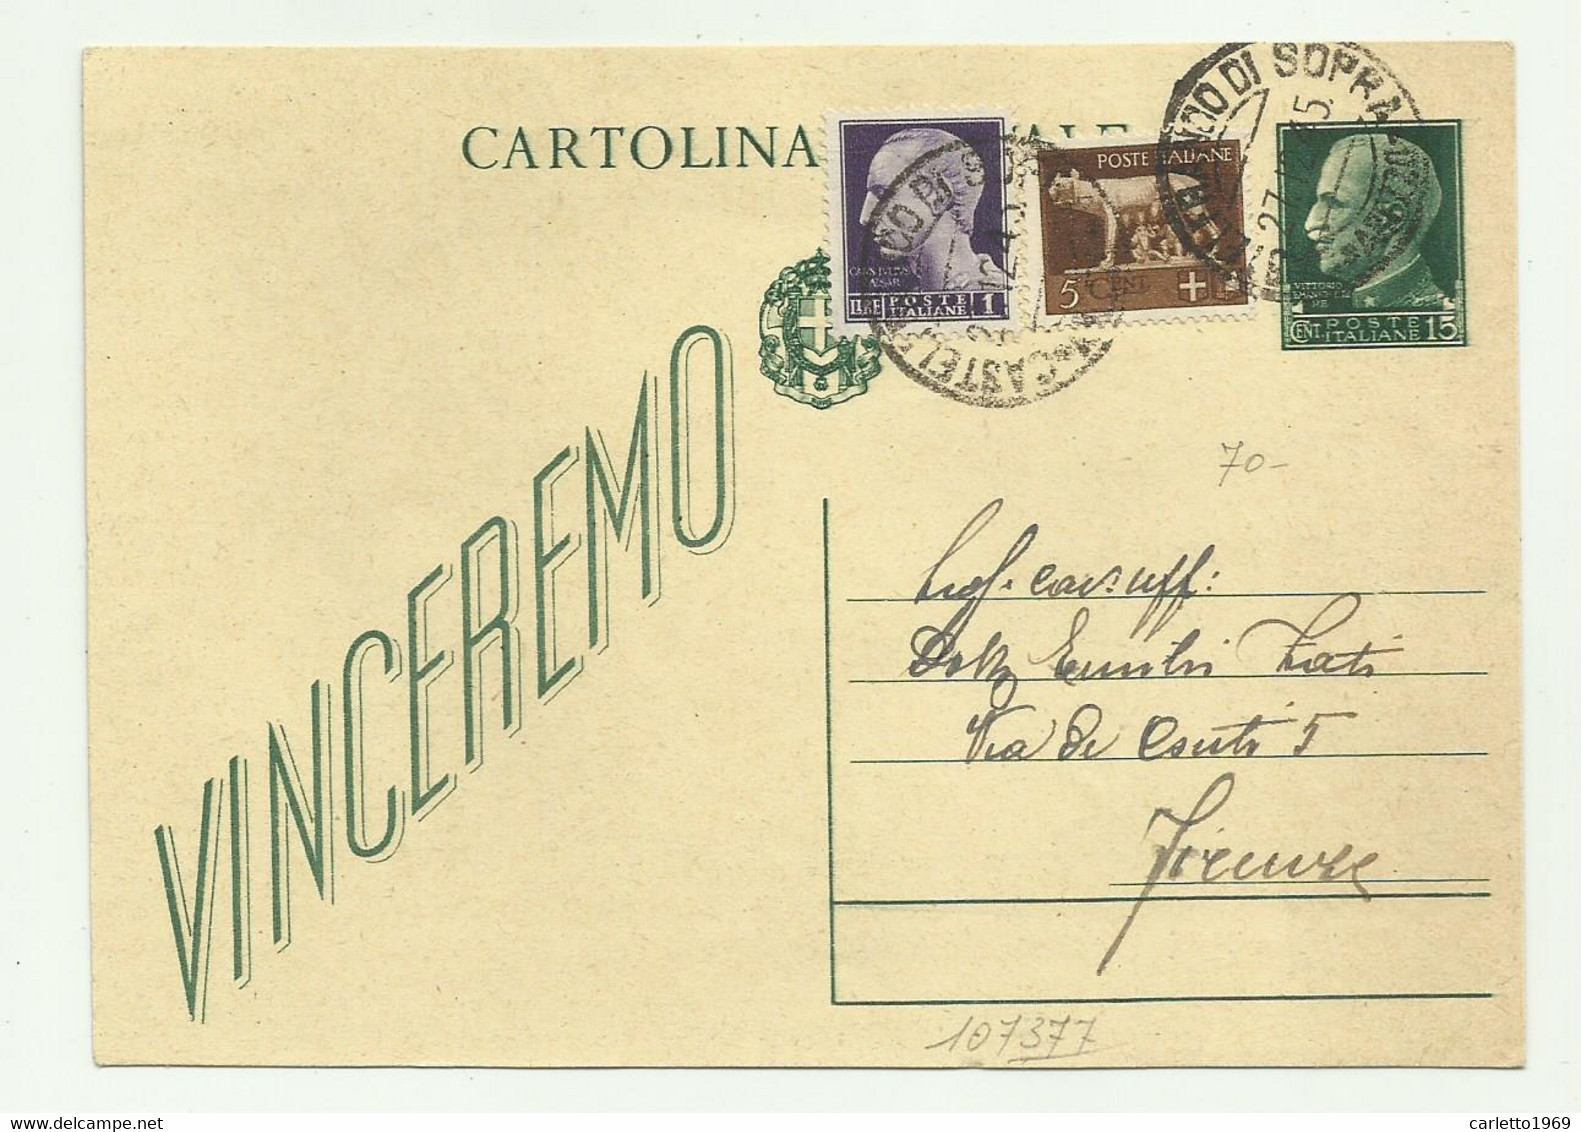 CARTOLINA POSTALE VINCEREMO - CASTELFRANCO DI SOPRA 1945 - AFFRANCATURA MISTA - Marcophilia